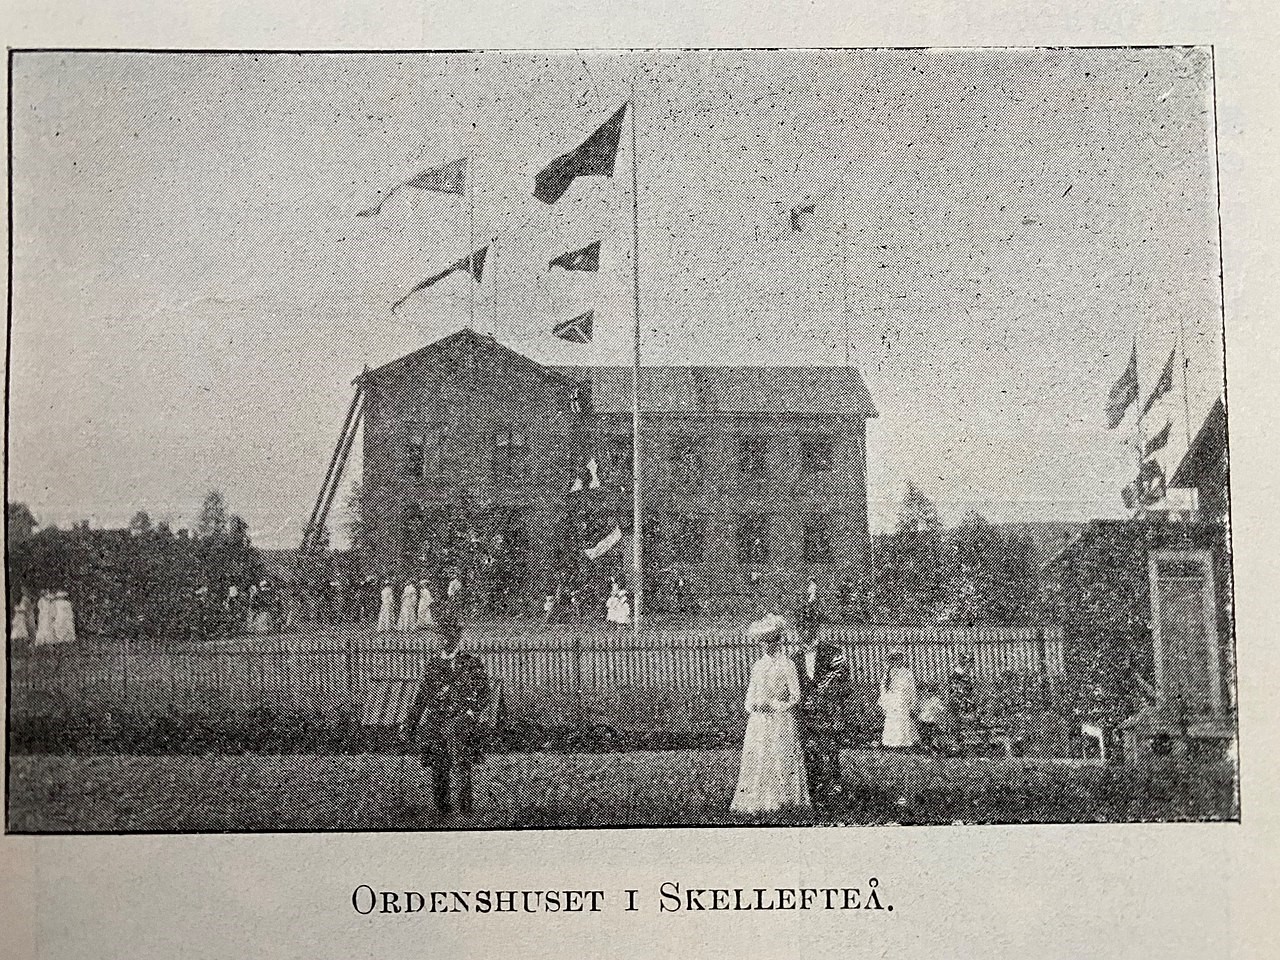 Bild tagen på Ordenshuset i Skellefteå år 1906.